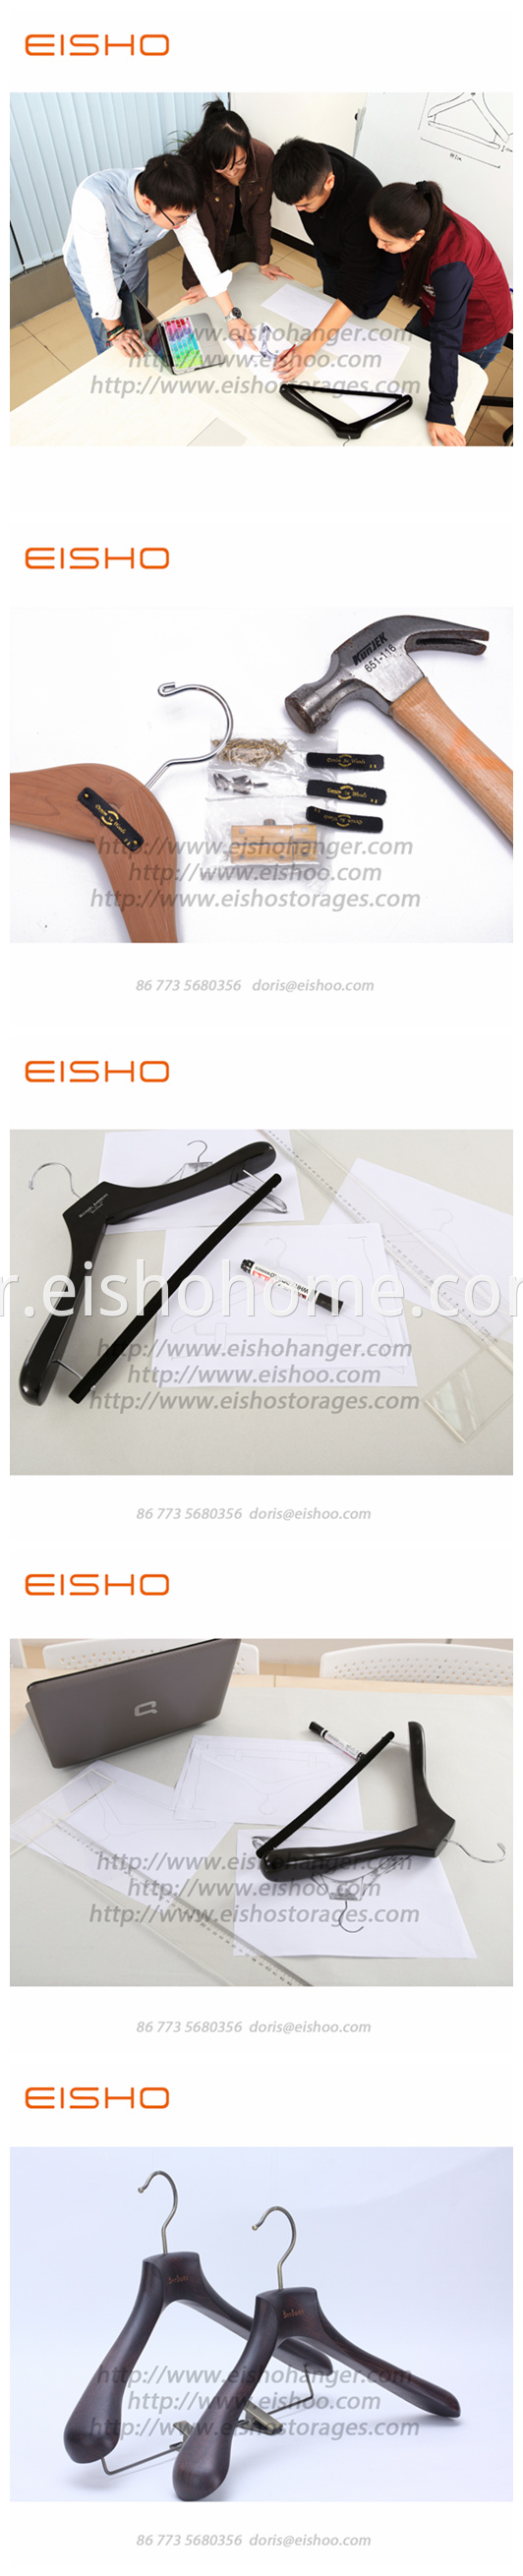 EISHO-design-team-clothes-hangers-factory-supplier